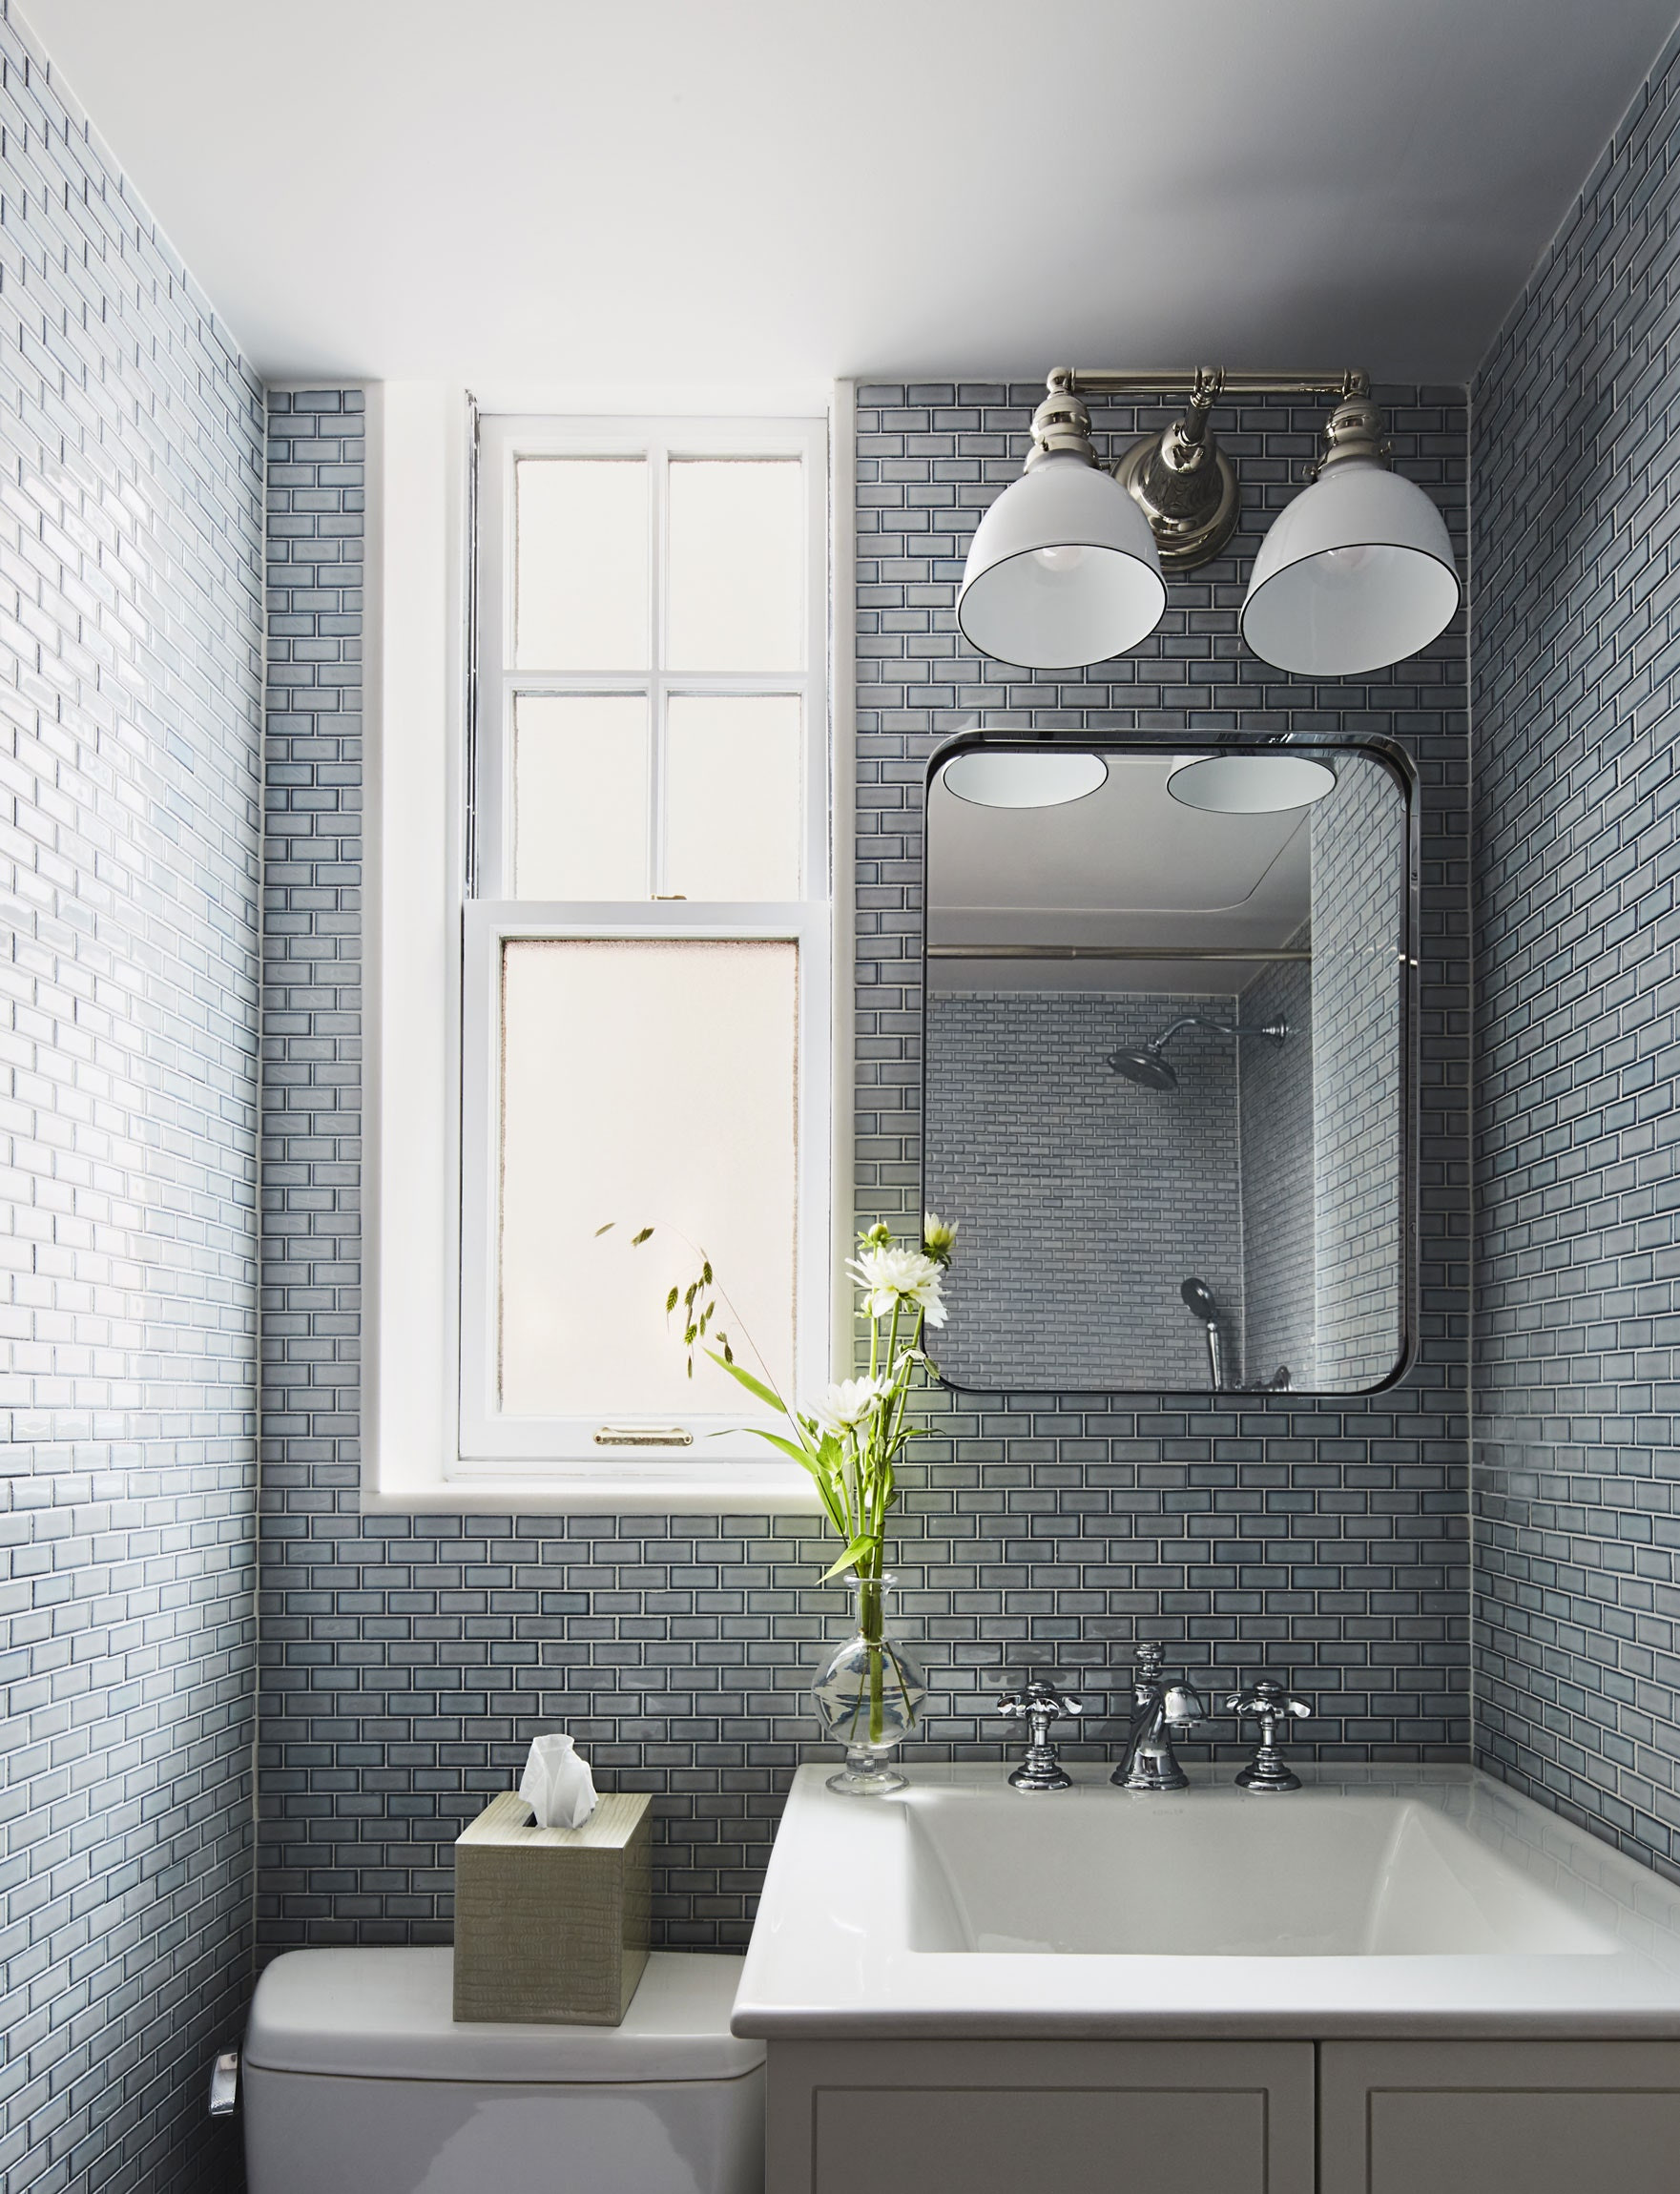 Bathroom Tiles Design Images
 This Bathroom Tile Design Idea Changes Everything